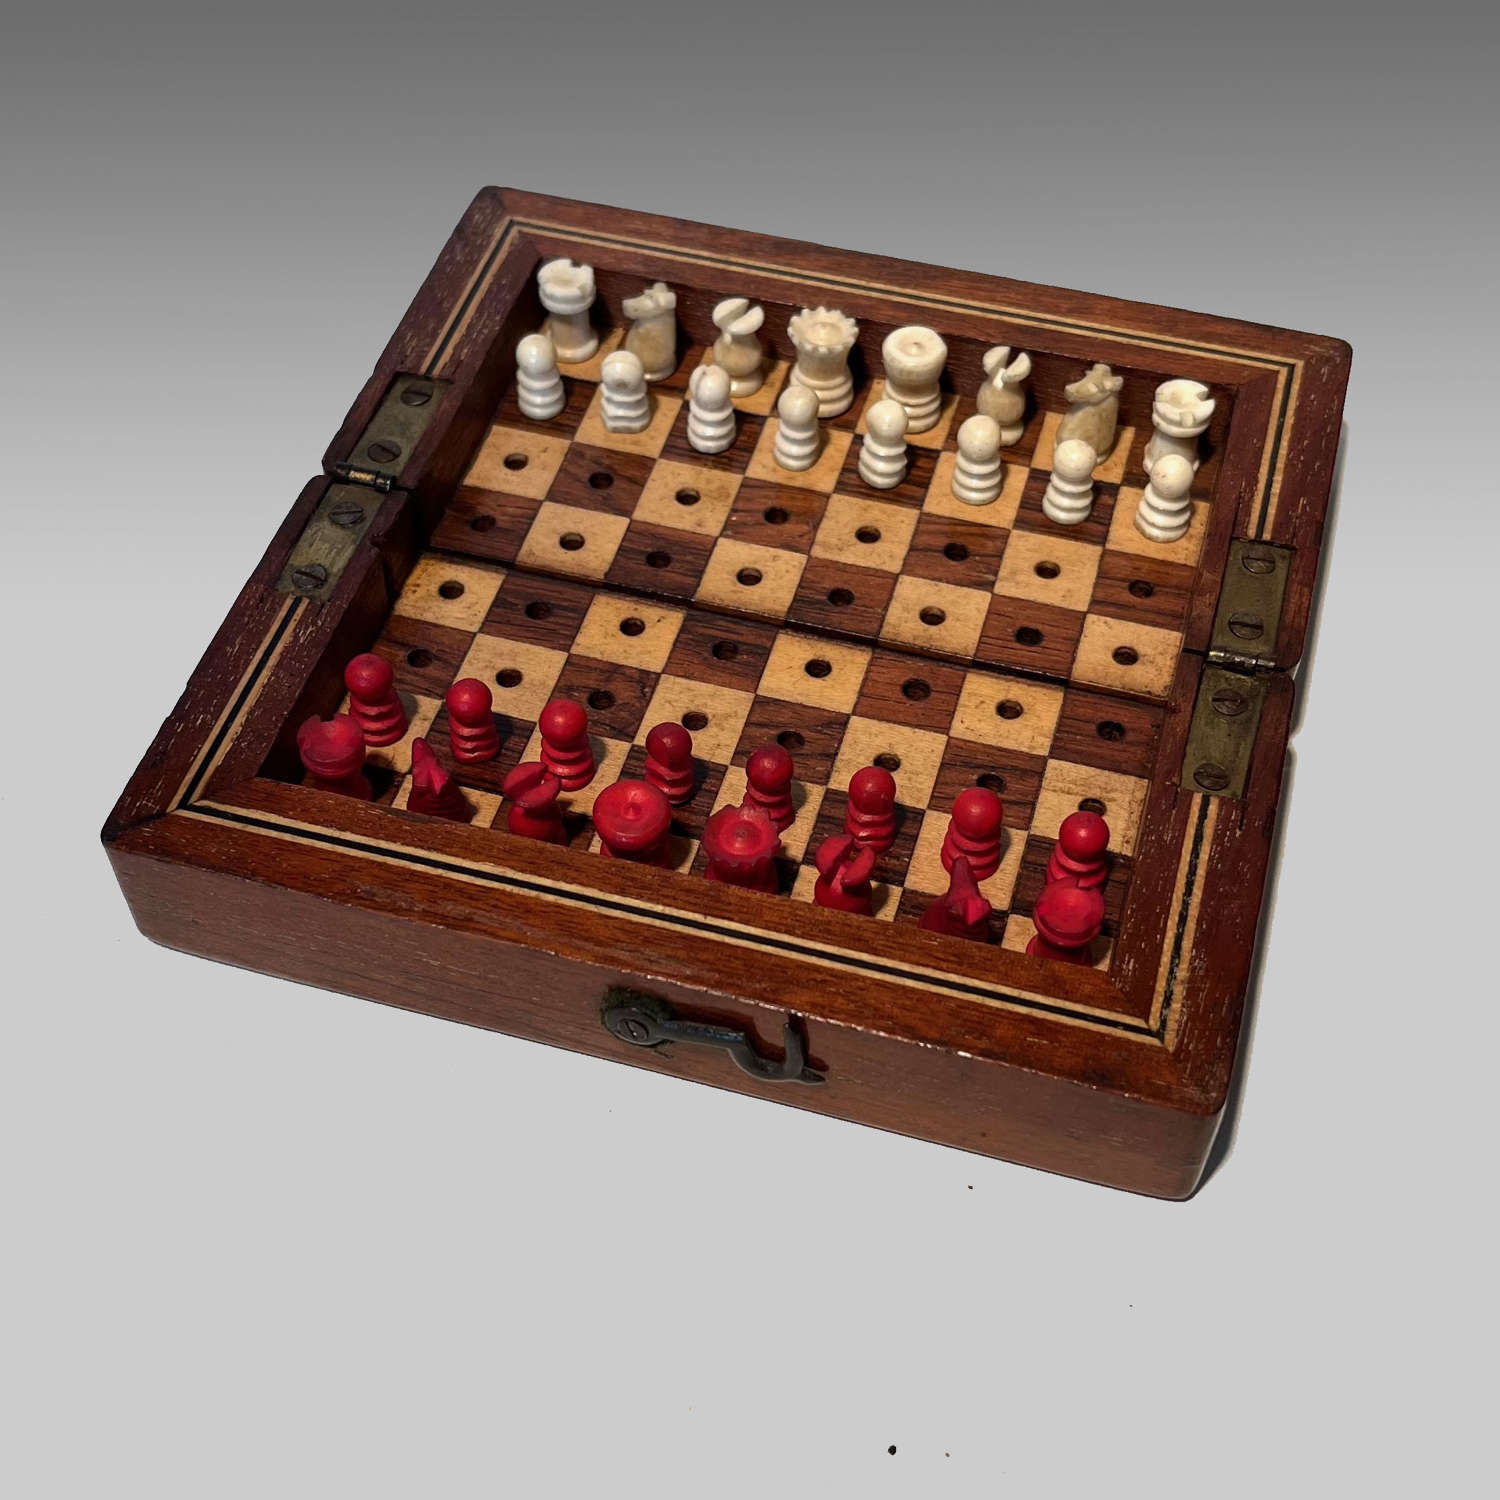 Small mahogany cased travelling chess set